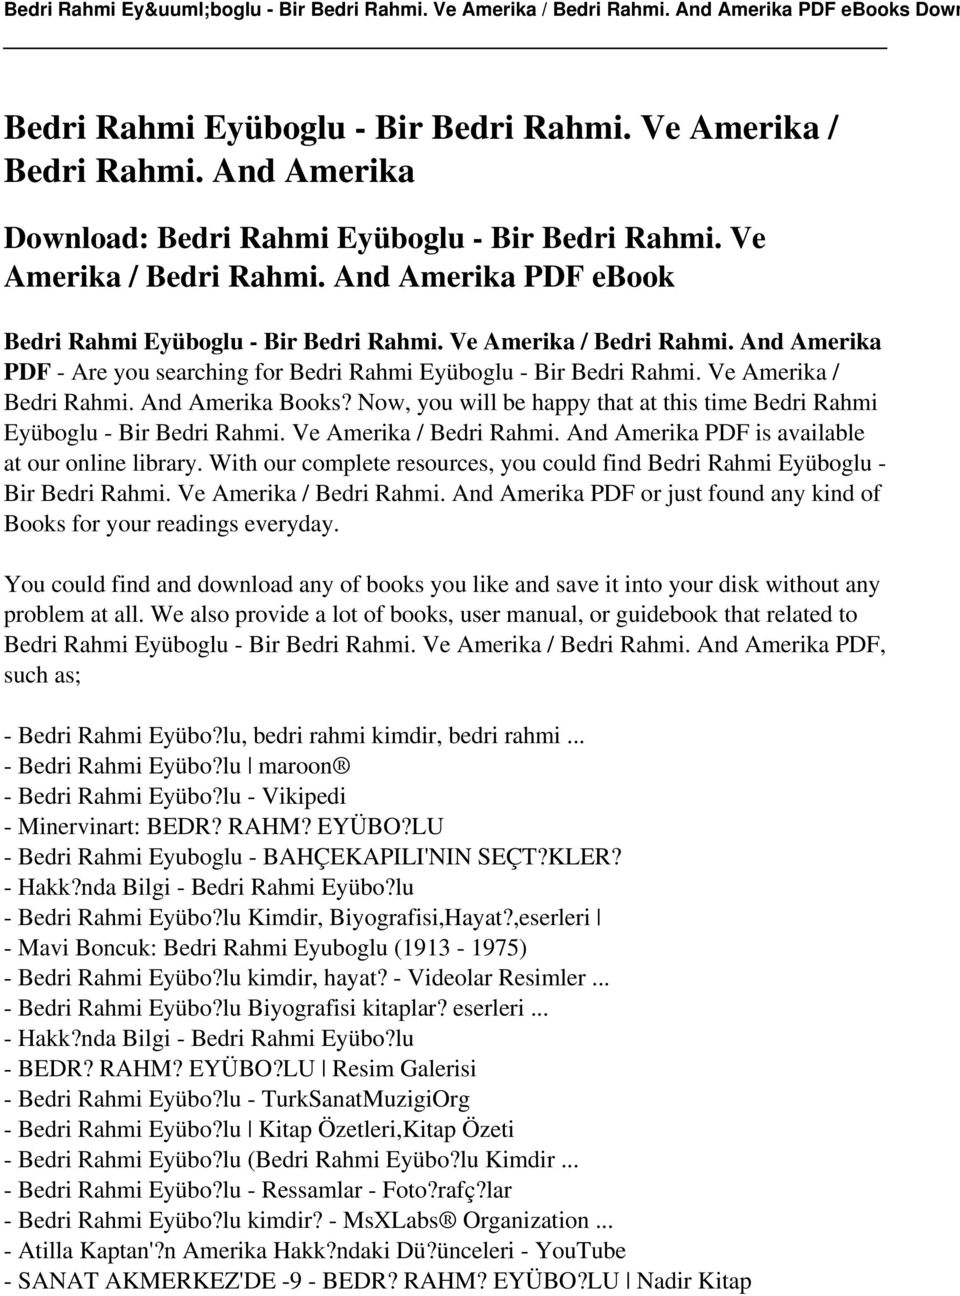 Now, you will be happy that at this time Bedri Rahmi Eyüboglu - Bir Bedri Rahmi. Ve Amerika / Bedri Rahmi. And Amerika PDF is available at our online library.